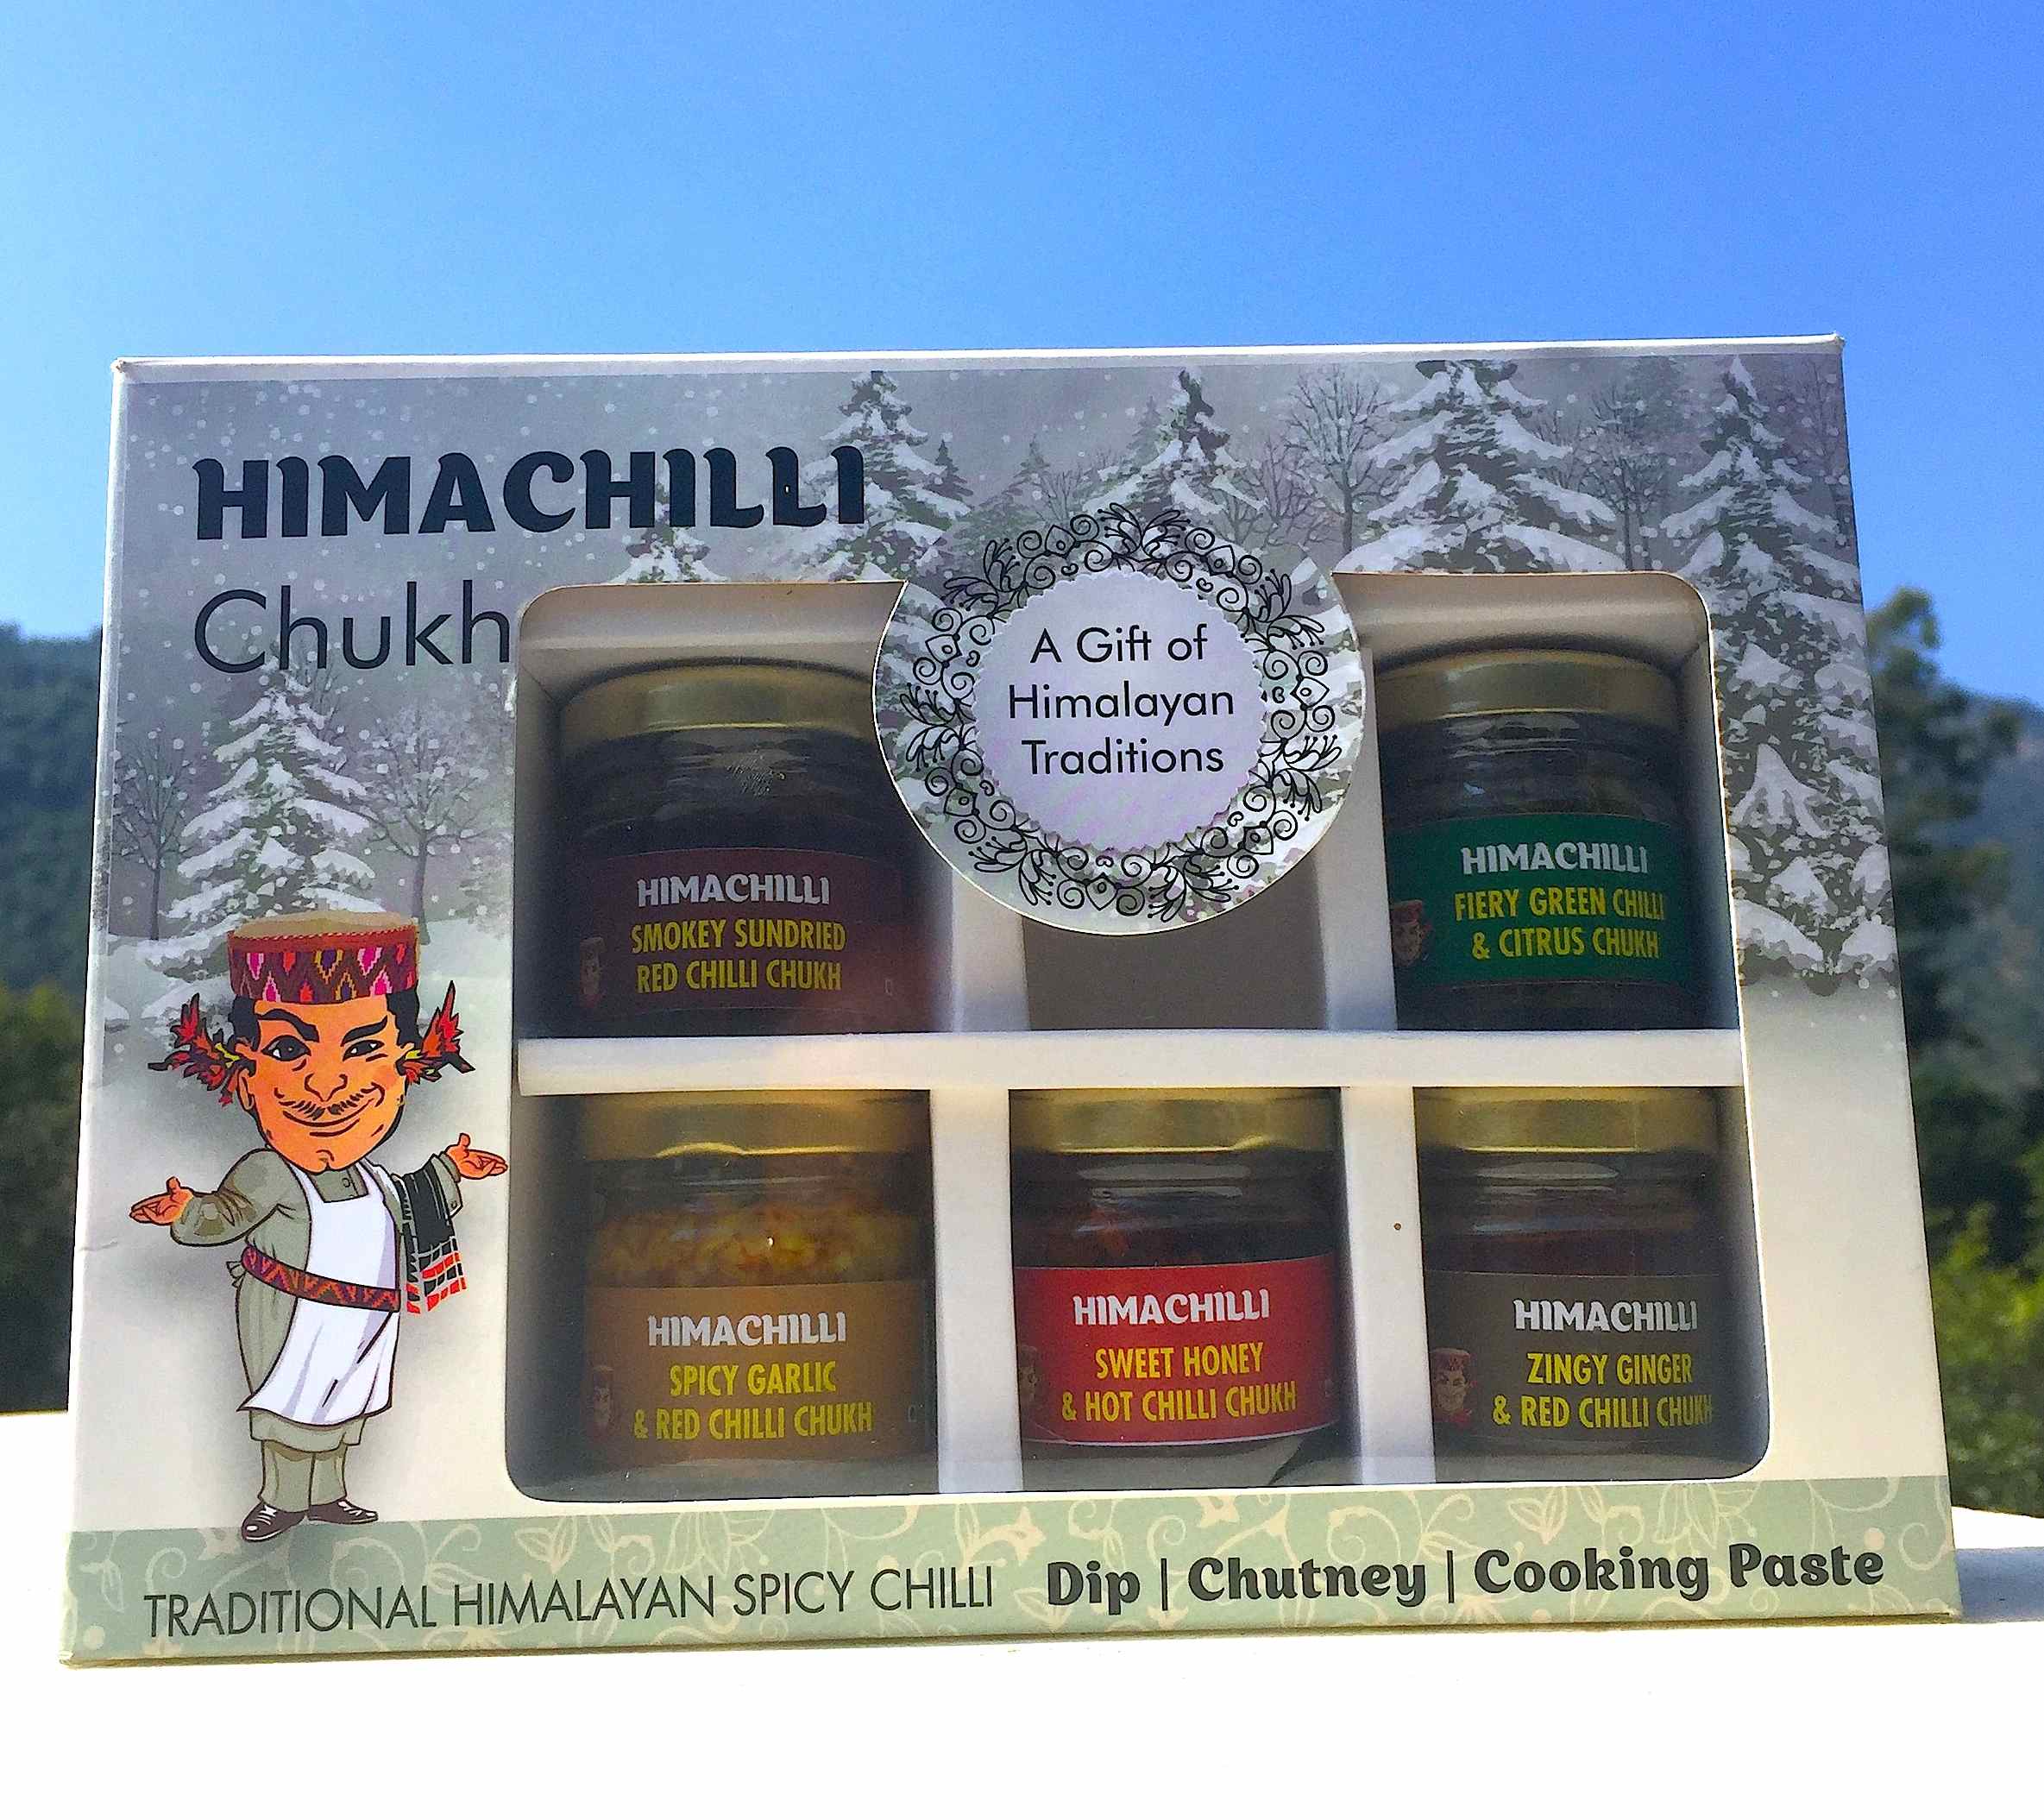 Chilli chutney, Red Chilli Chukh, Chamba Chukh, Himachilli, Chilli Pickle, Honey Red Chilli paste, Chilli Sauce, Chilli Chicken, Samosa dip, Spice gift, food gift, gifting ideas, 